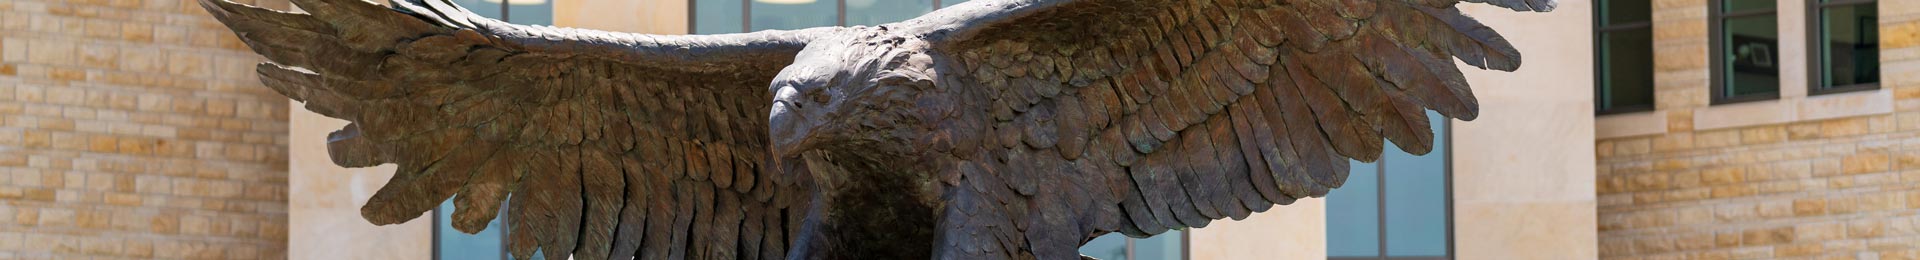 Photograph: Statute of bronze eagle outside Washburn University School of Law.